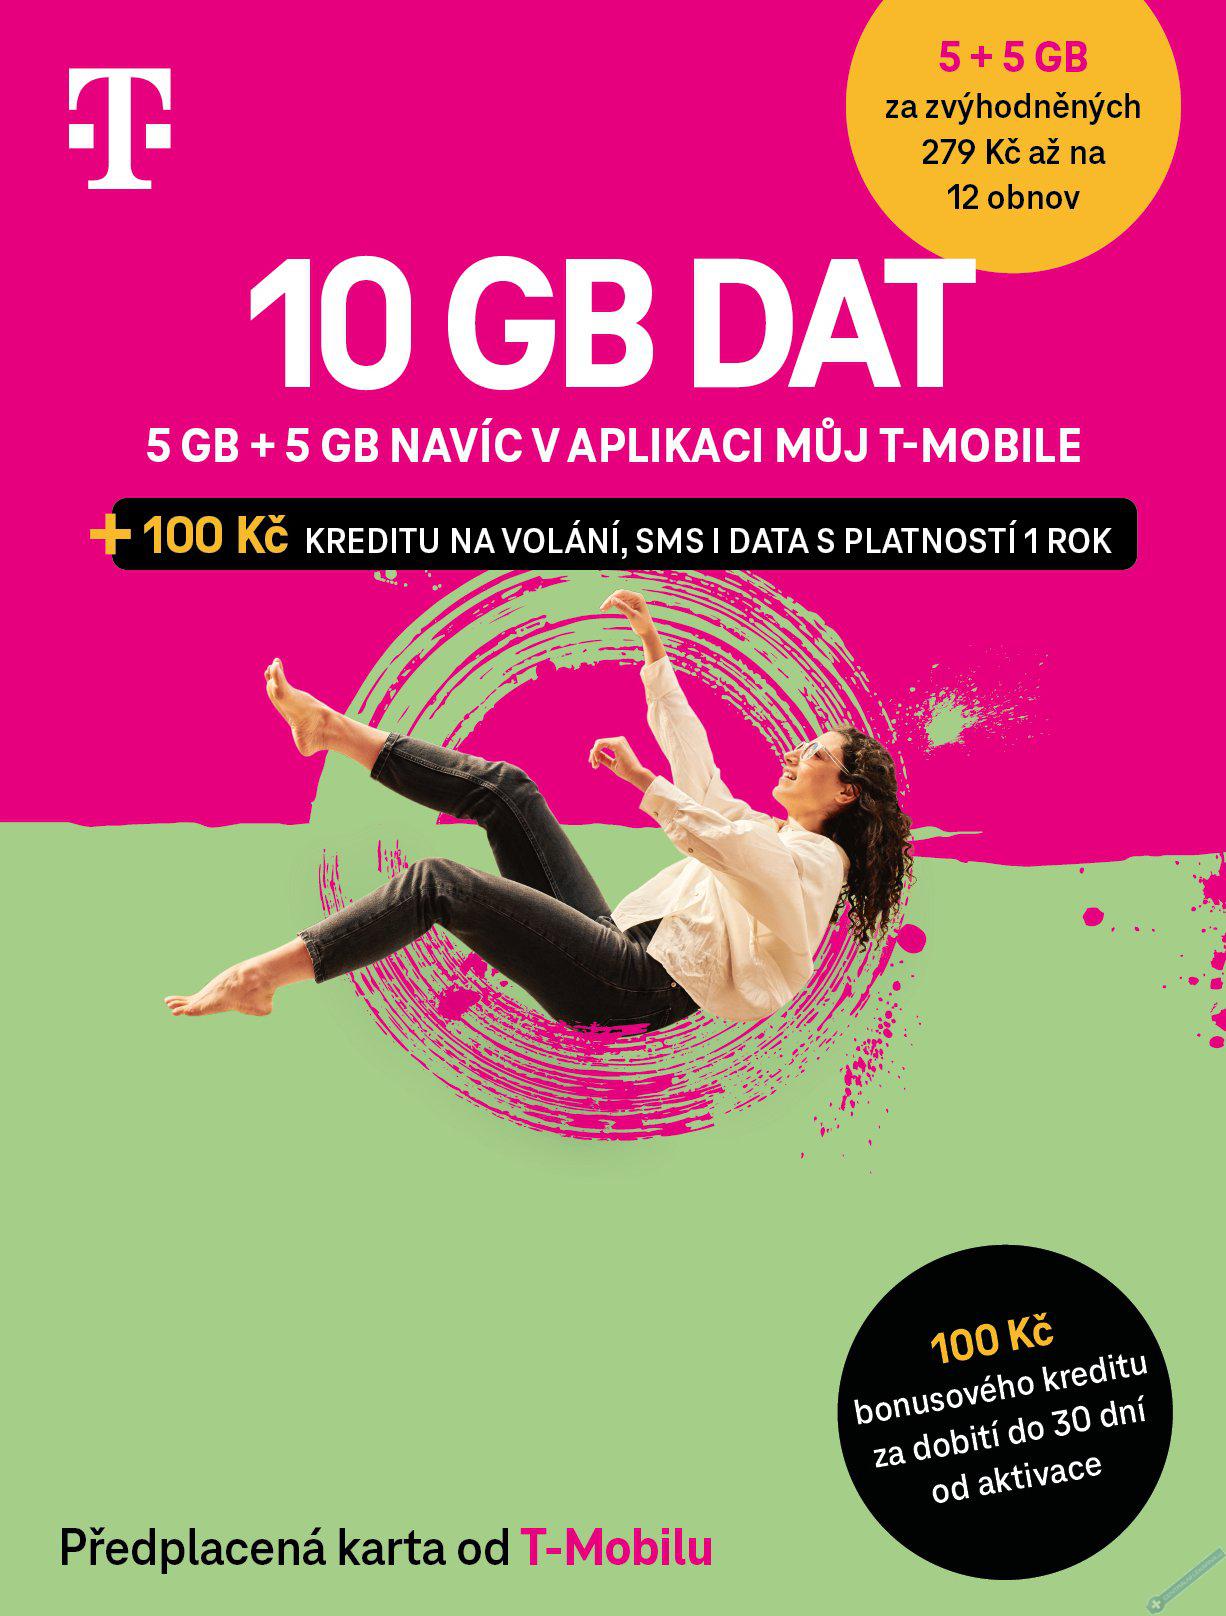 T-Mobile Pedplacen karta 10GB